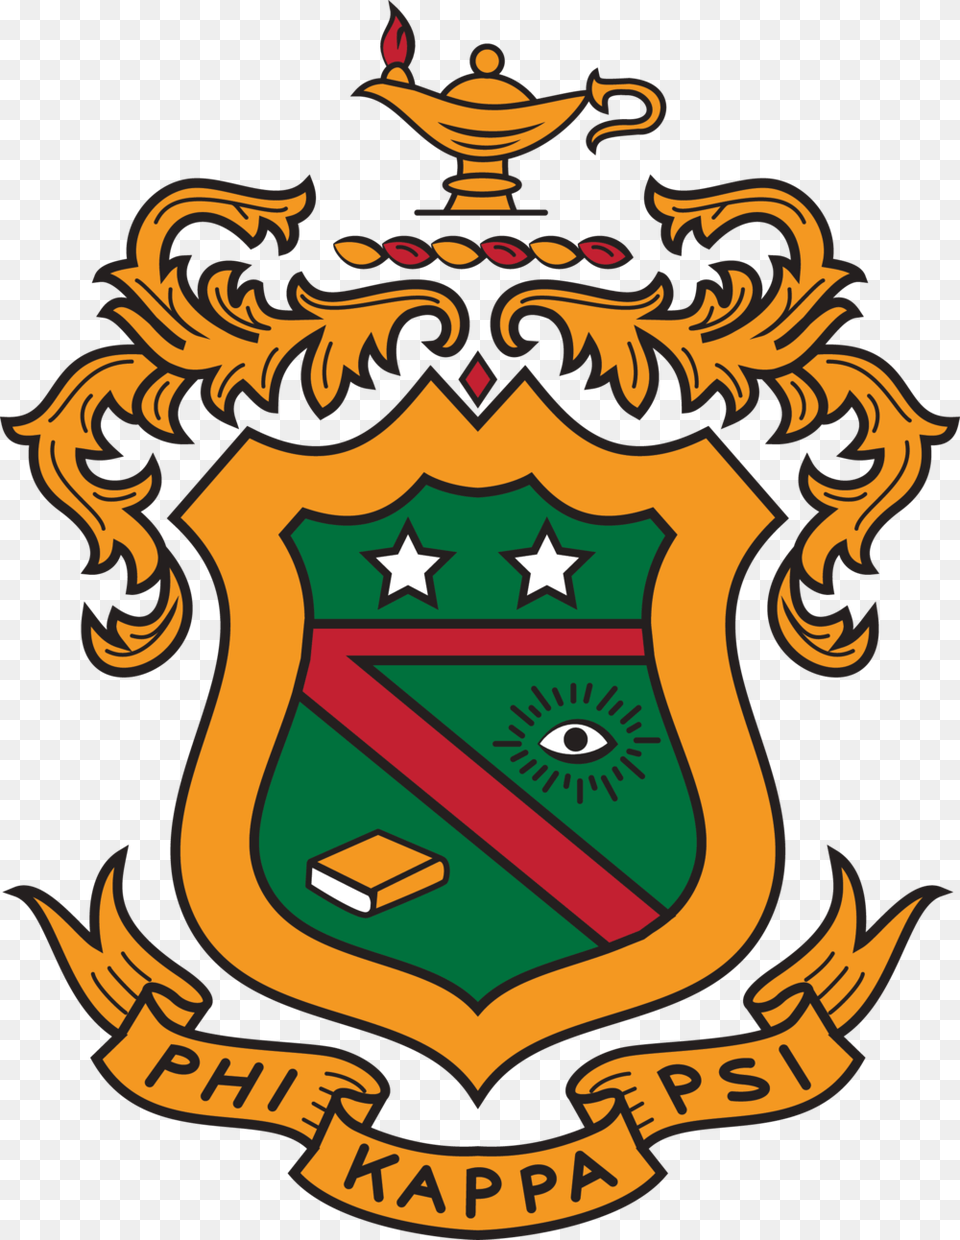 Phi Kappa Psi Phi Kappa Psi Wvu Alpha, Emblem, Symbol, Logo, Dynamite Png